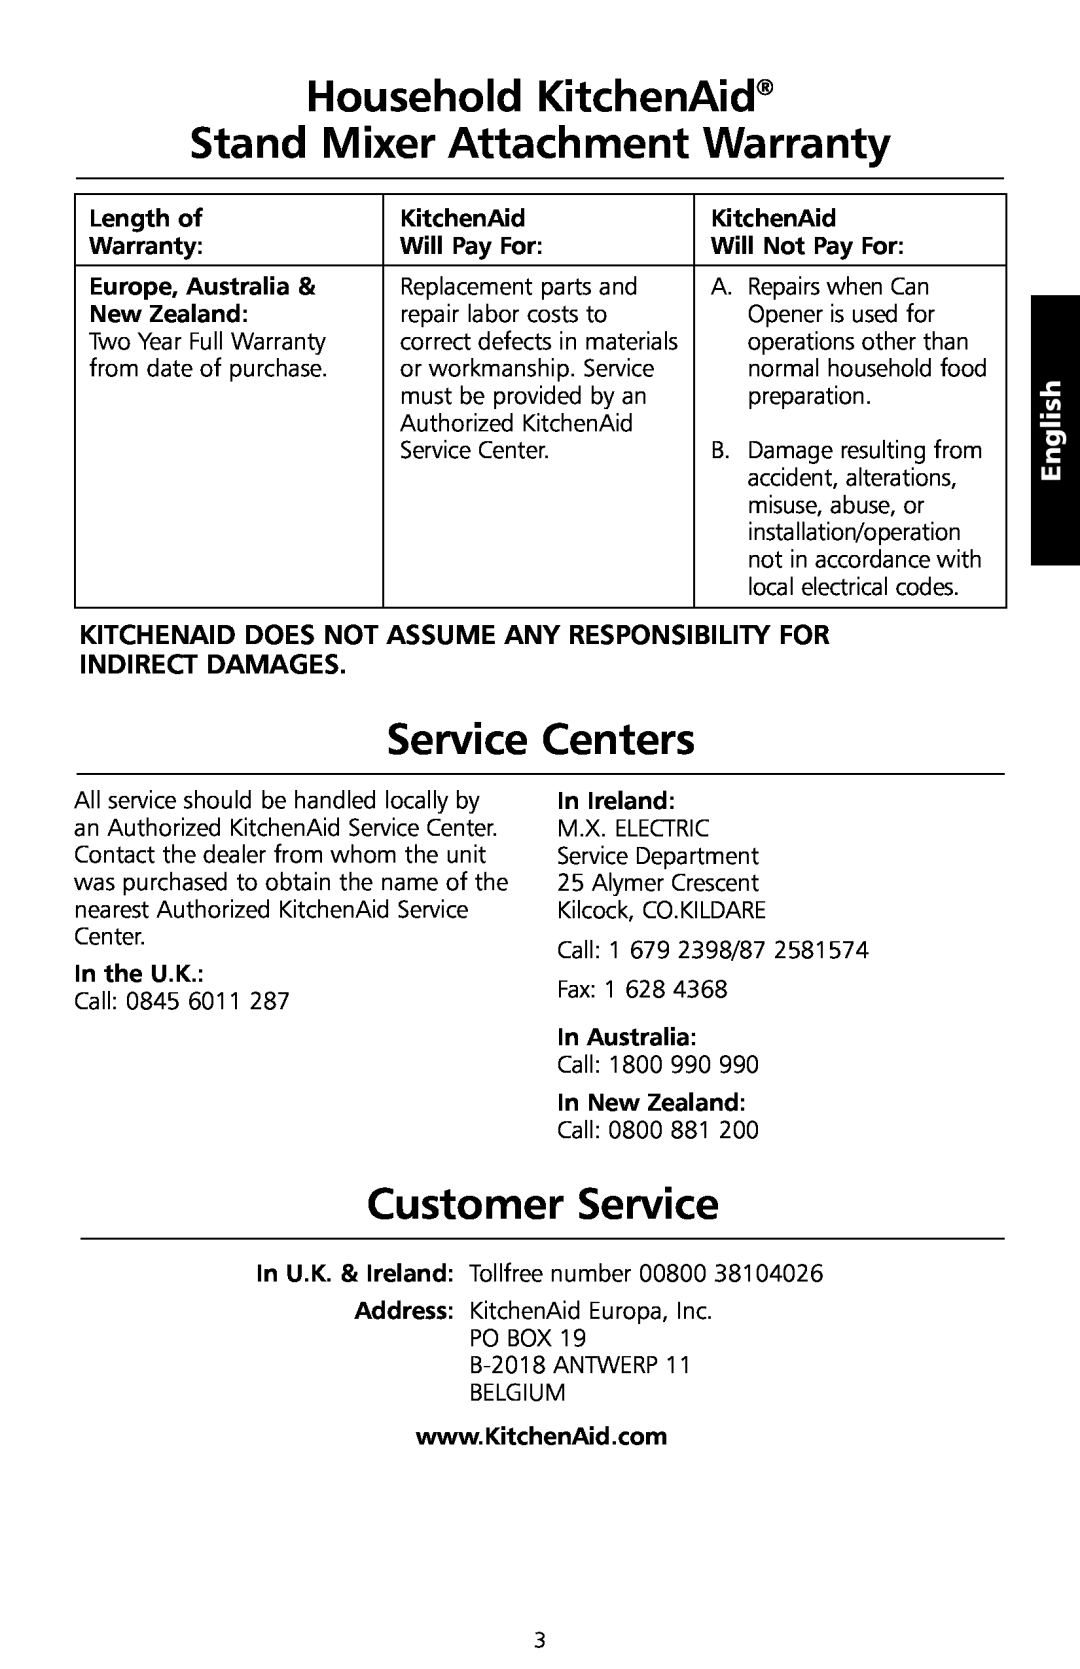 KitchenAid 5CO manual Household KitchenAid Stand Mixer Attachment Warranty, Service Centers, Customer Service 